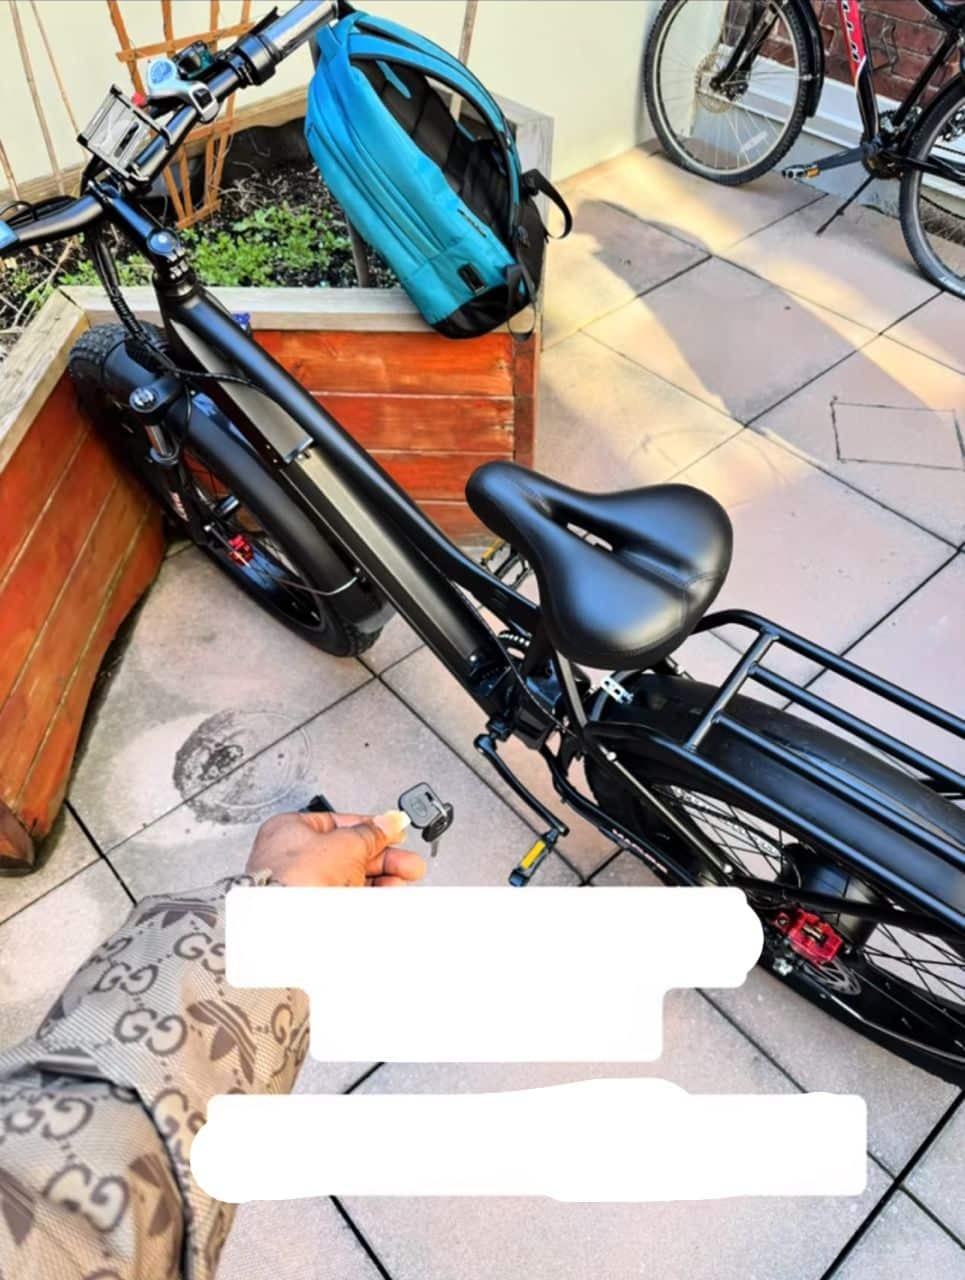 Canada-based man joyful as he buys first vehicle, flaunts electric bicycle 